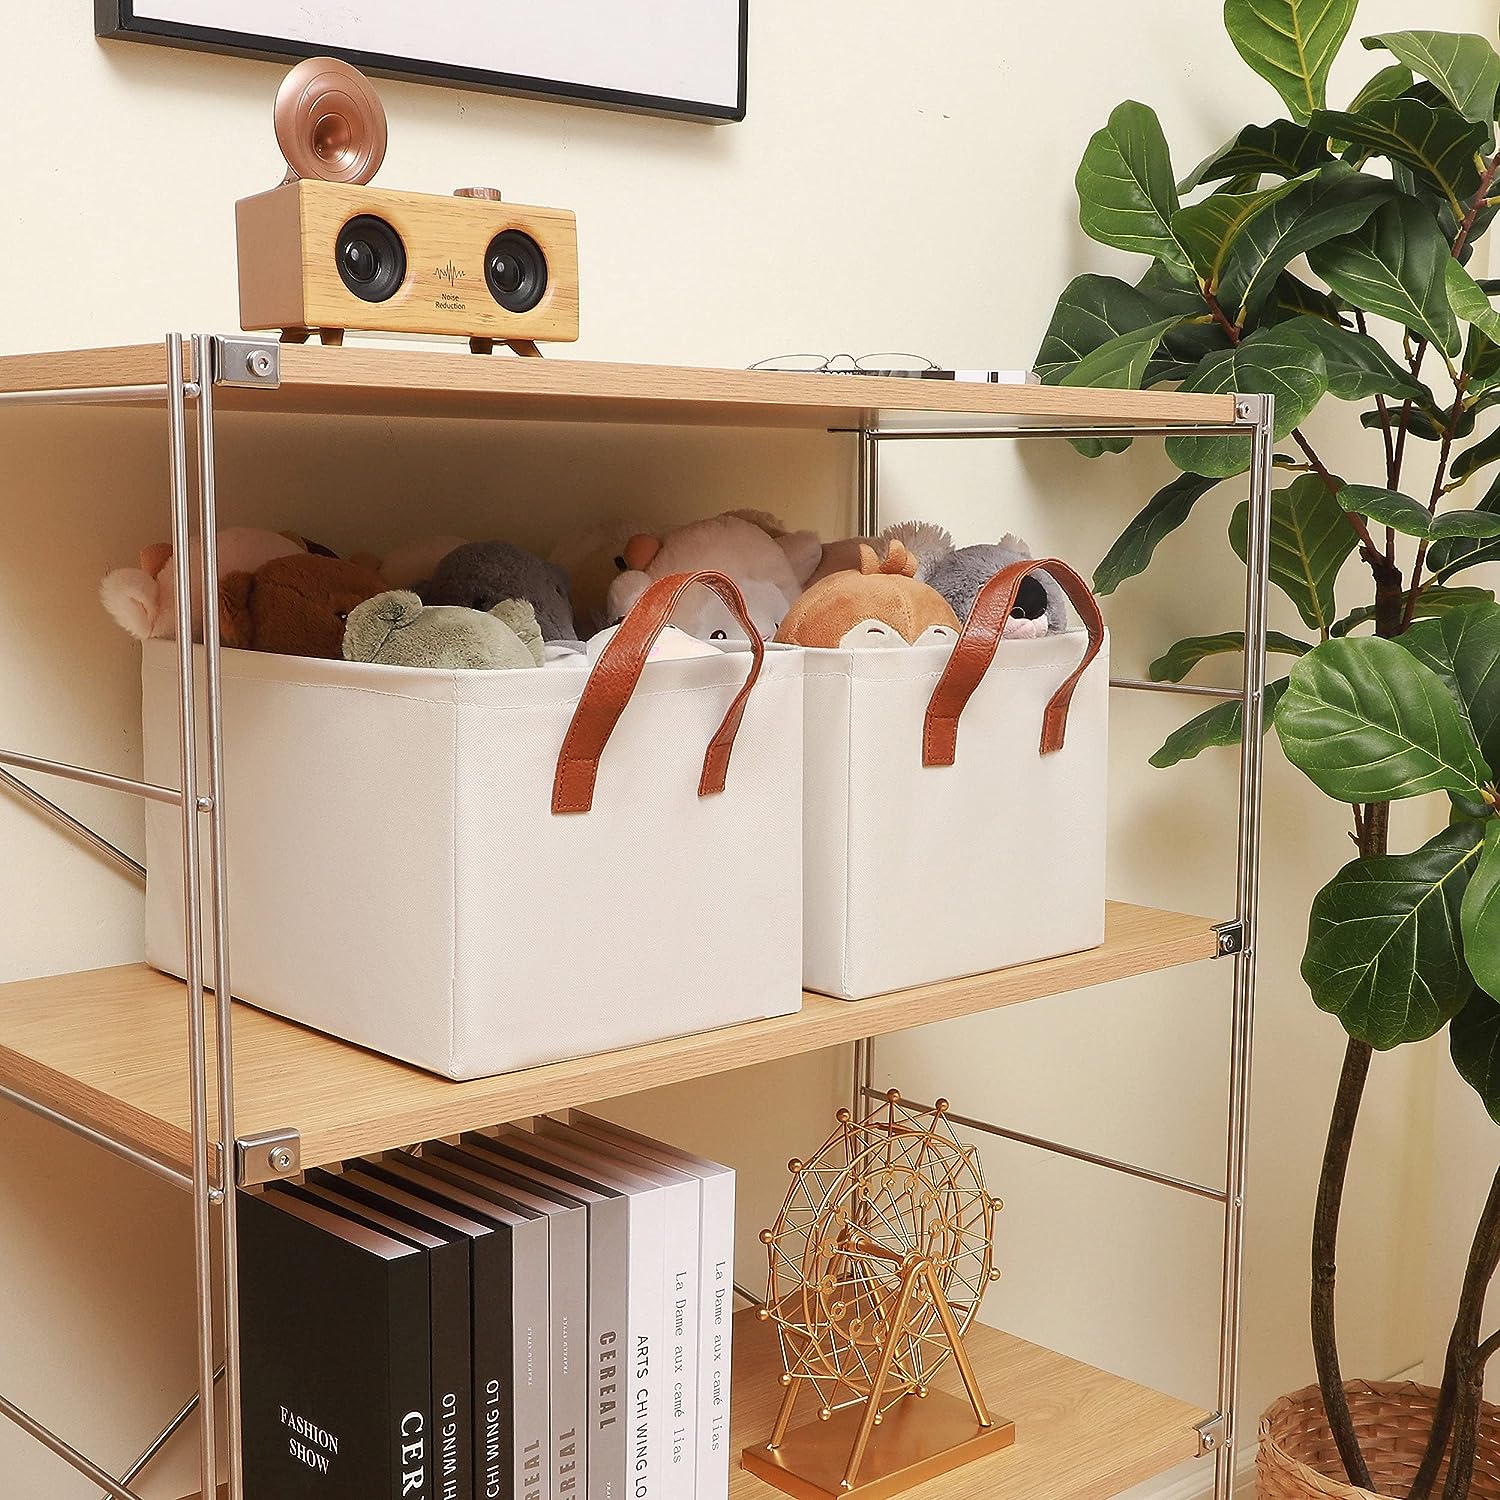 Blushbees Storage Baskets with Metal Frame for Organizing Wardrobe, Shelves, Bedroom, Closet